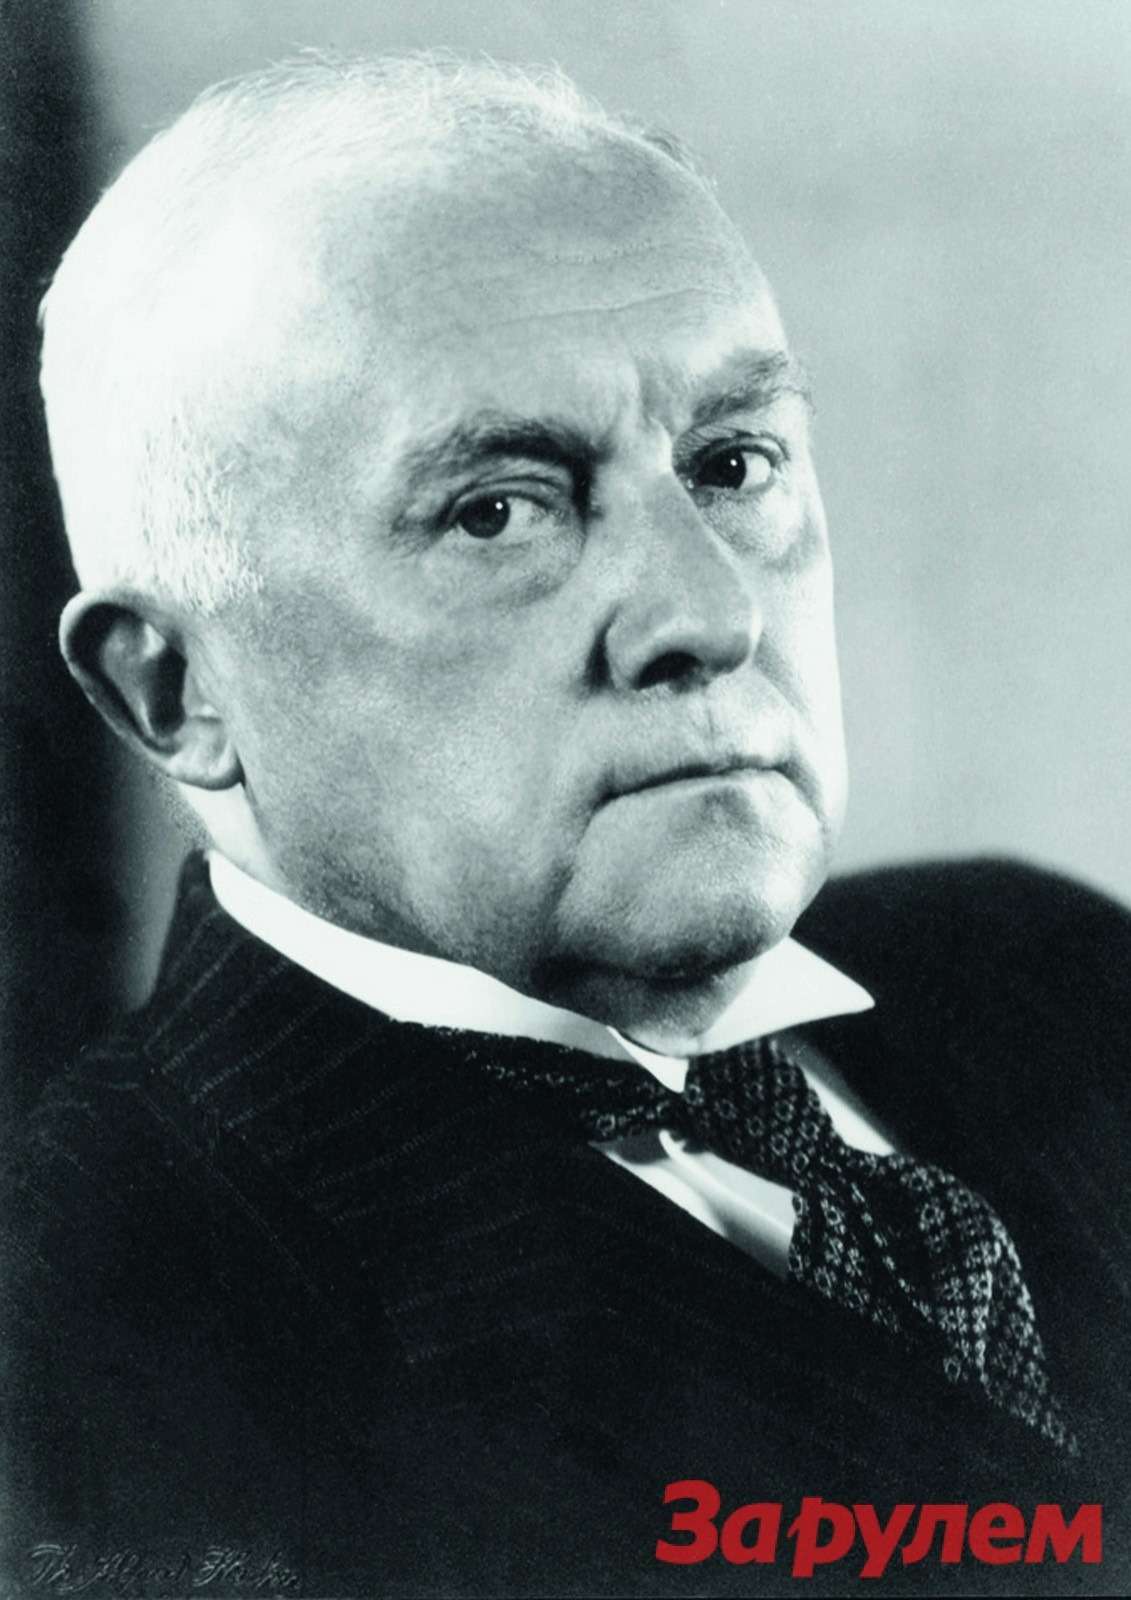  Йорген Скафте Расмуссен (1878 — 1964 гг.)